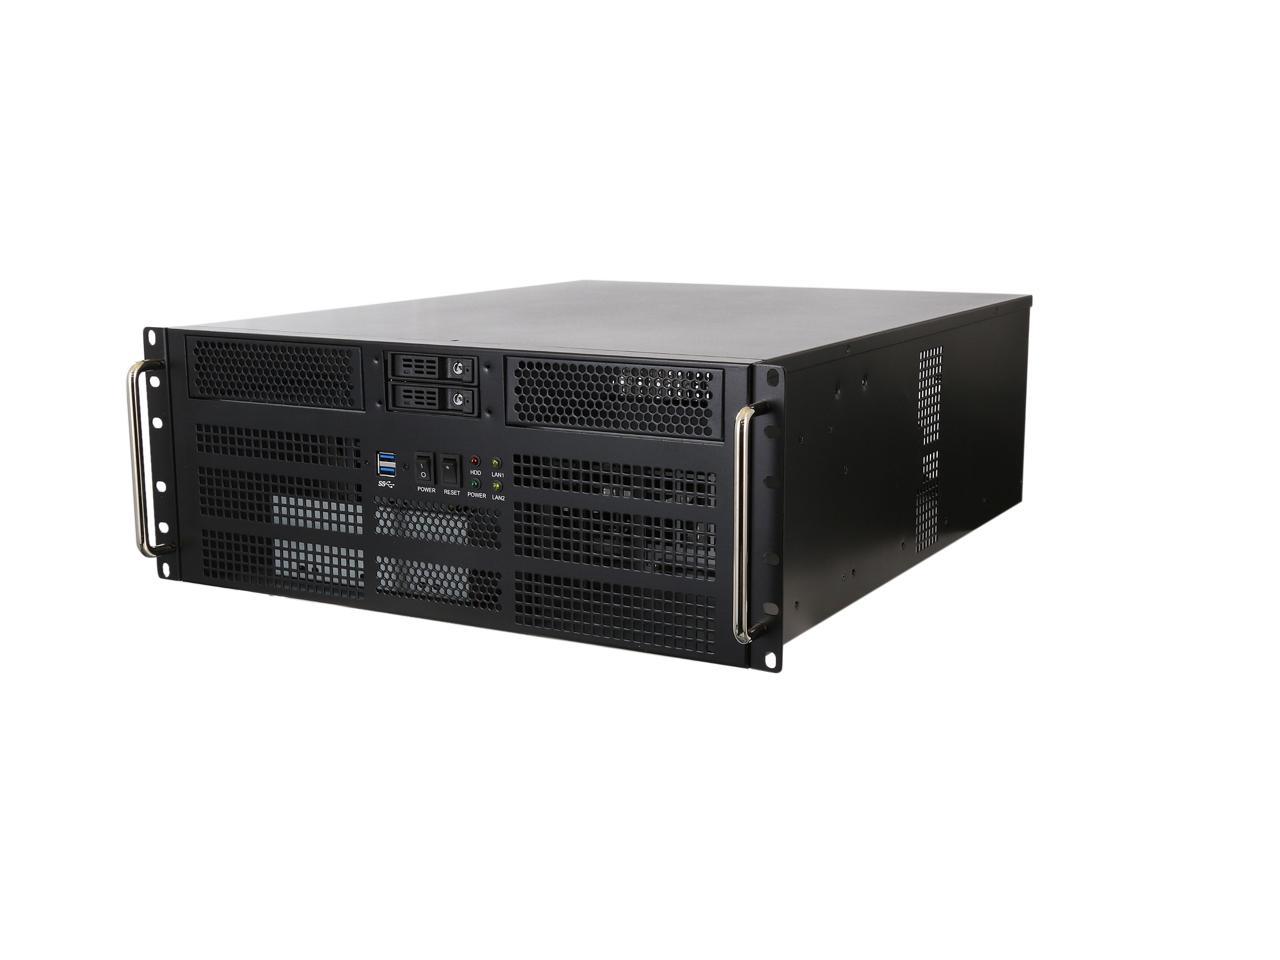 Athena Power Rm-4U8G525 Black Sgcc (T=1.2Mm) 4U Rackmount Server Case 2 External 5.25" Drive Bays - Oem